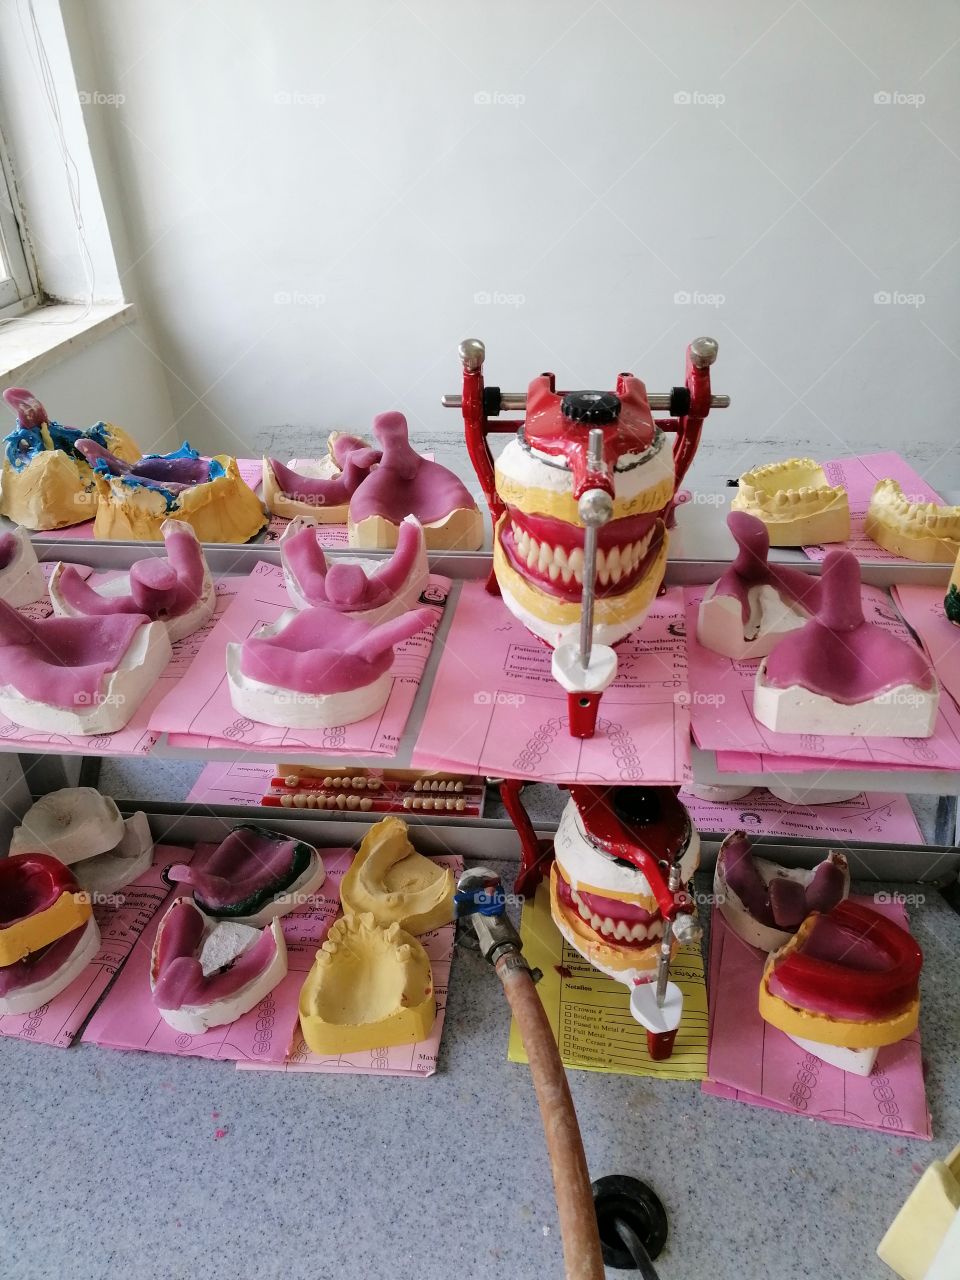 Dental laboratory